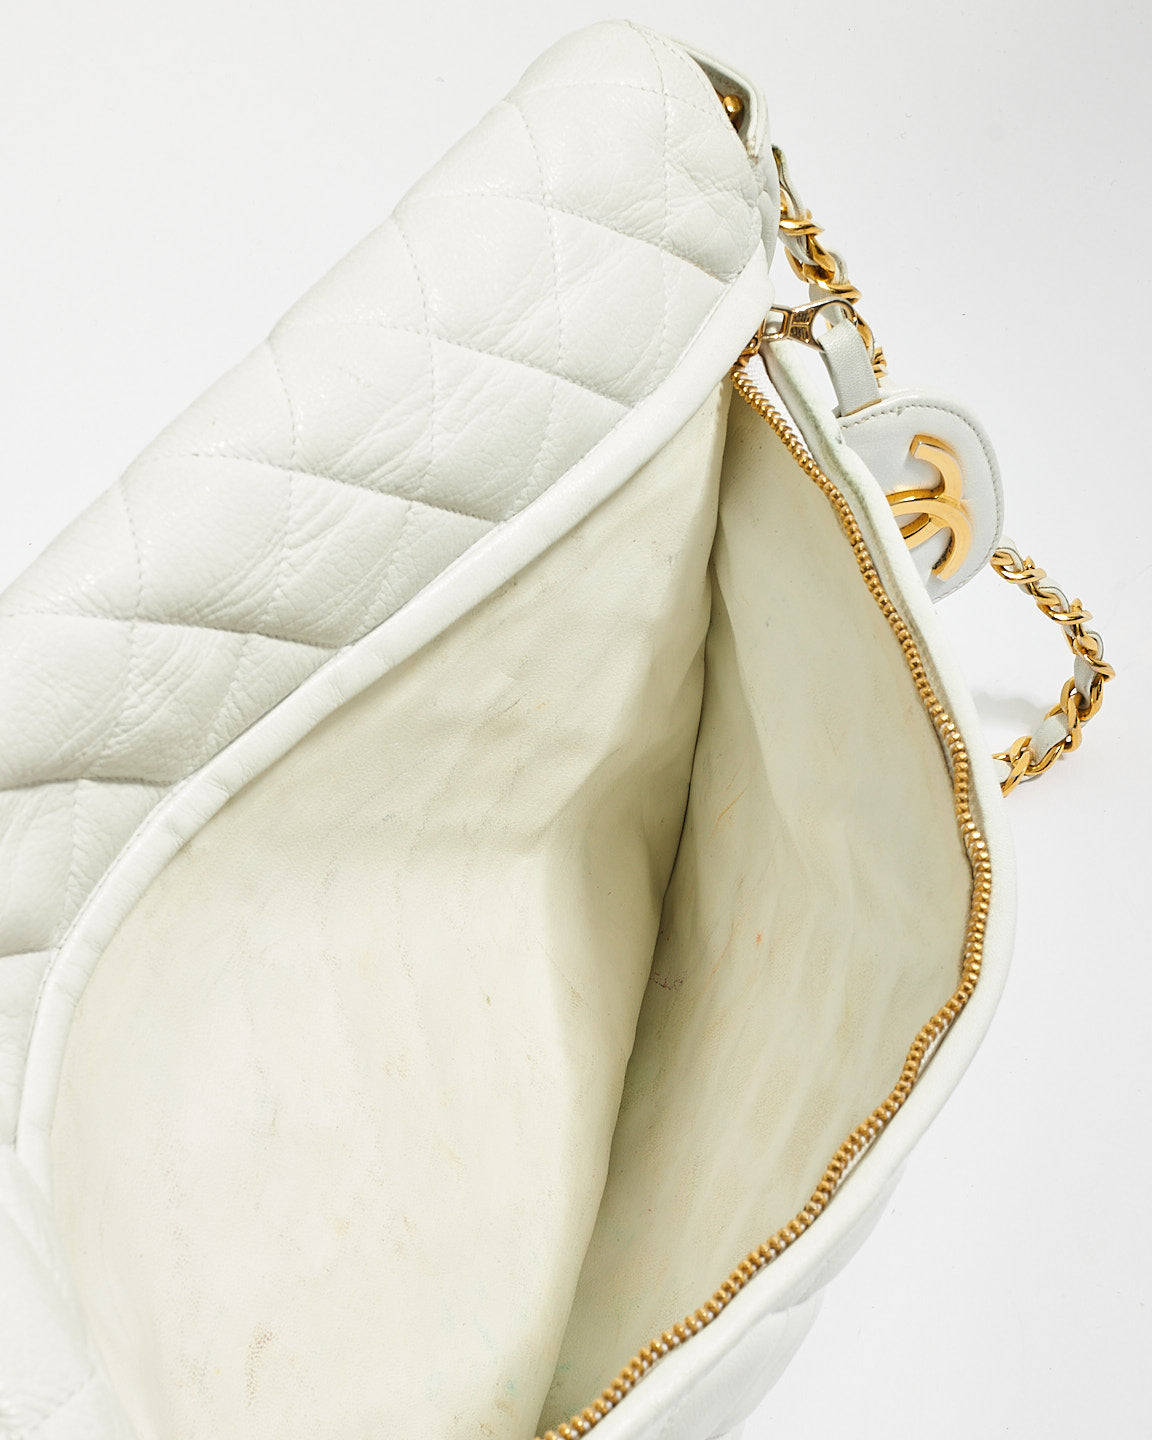 Chanel Vintage White Quilted Leather Large Flap Logo Messenger Bag